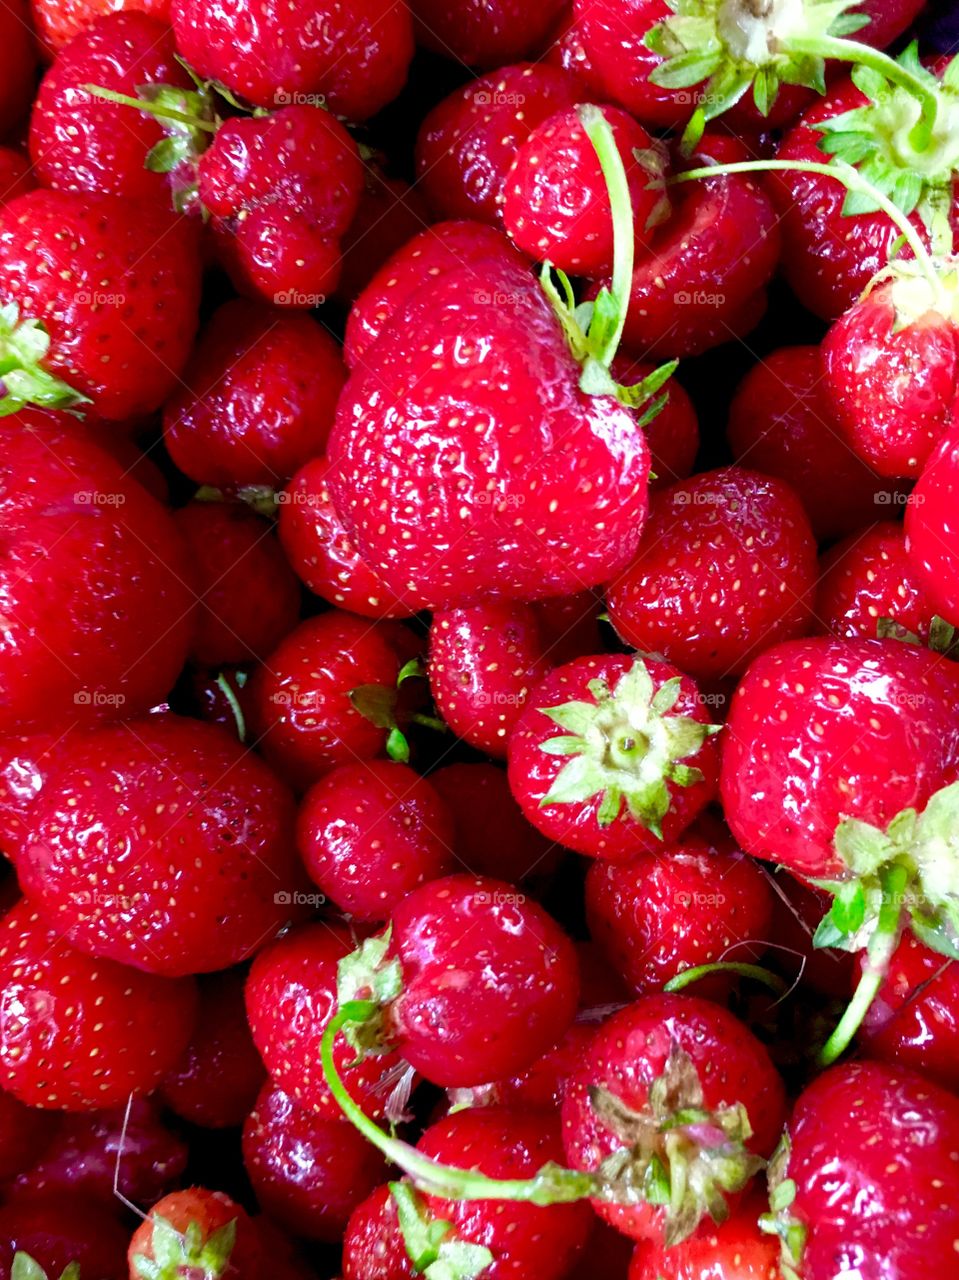 Fresh-picked strawberries 